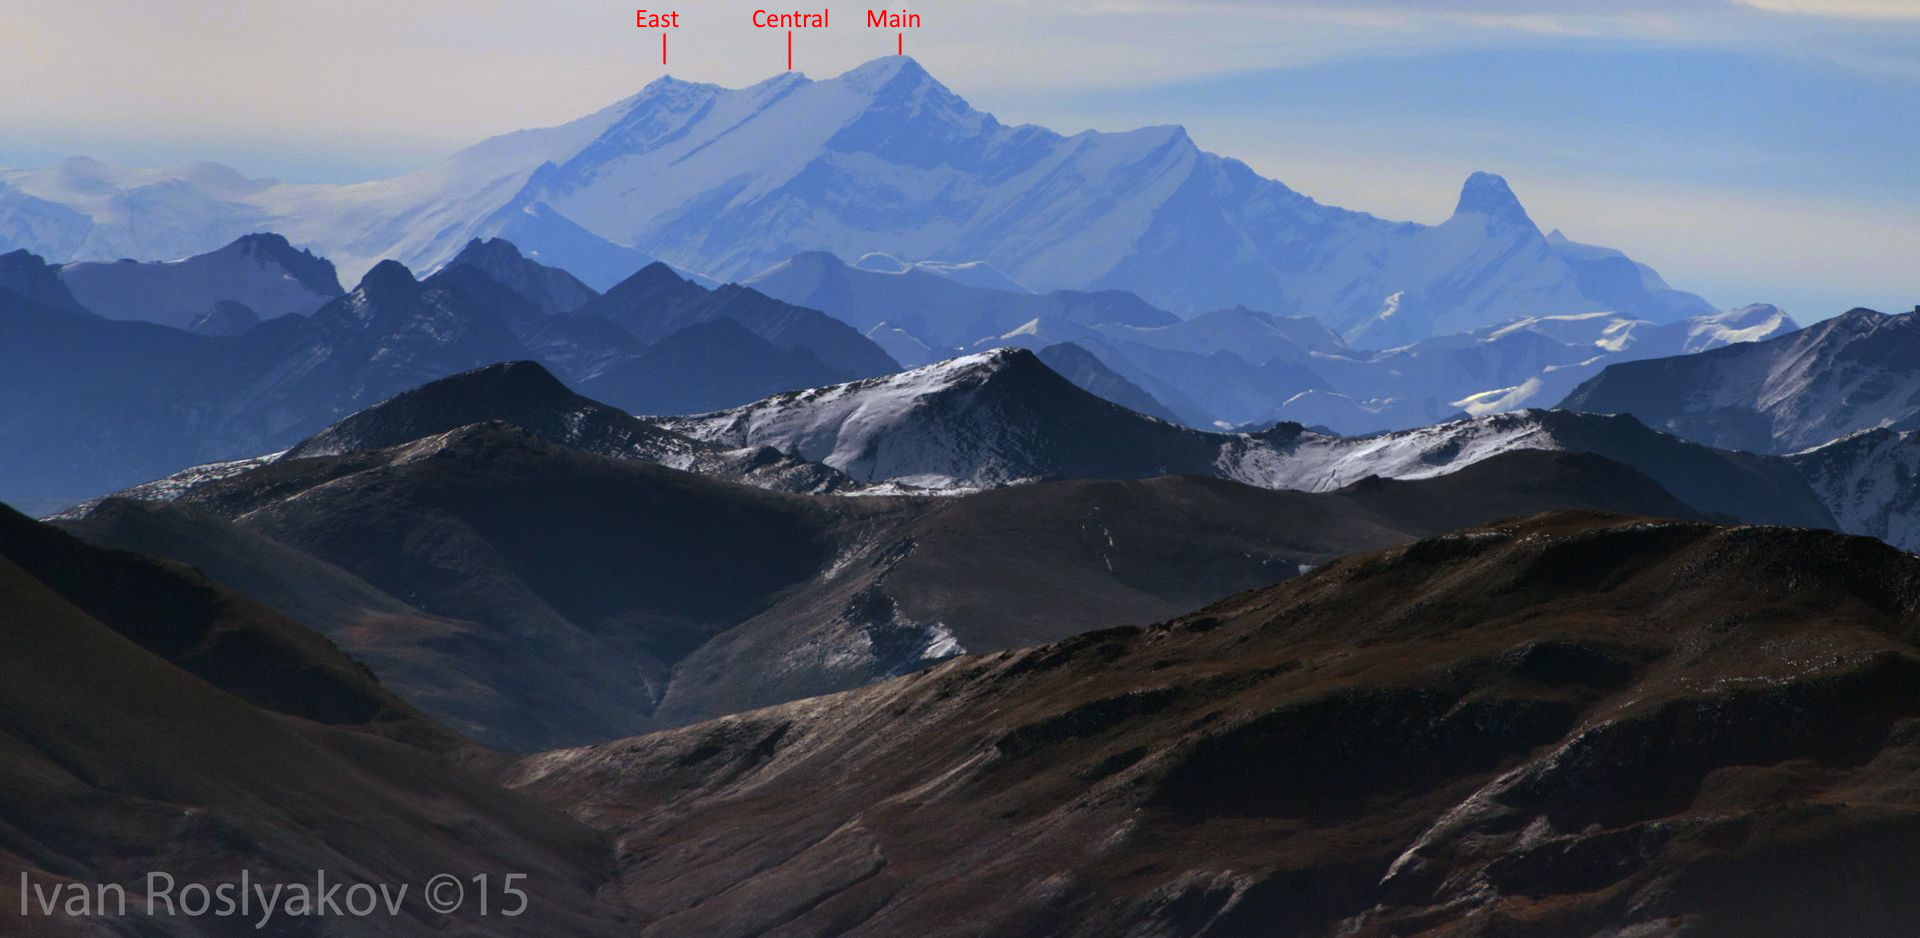 Triple summits of Annapurna I